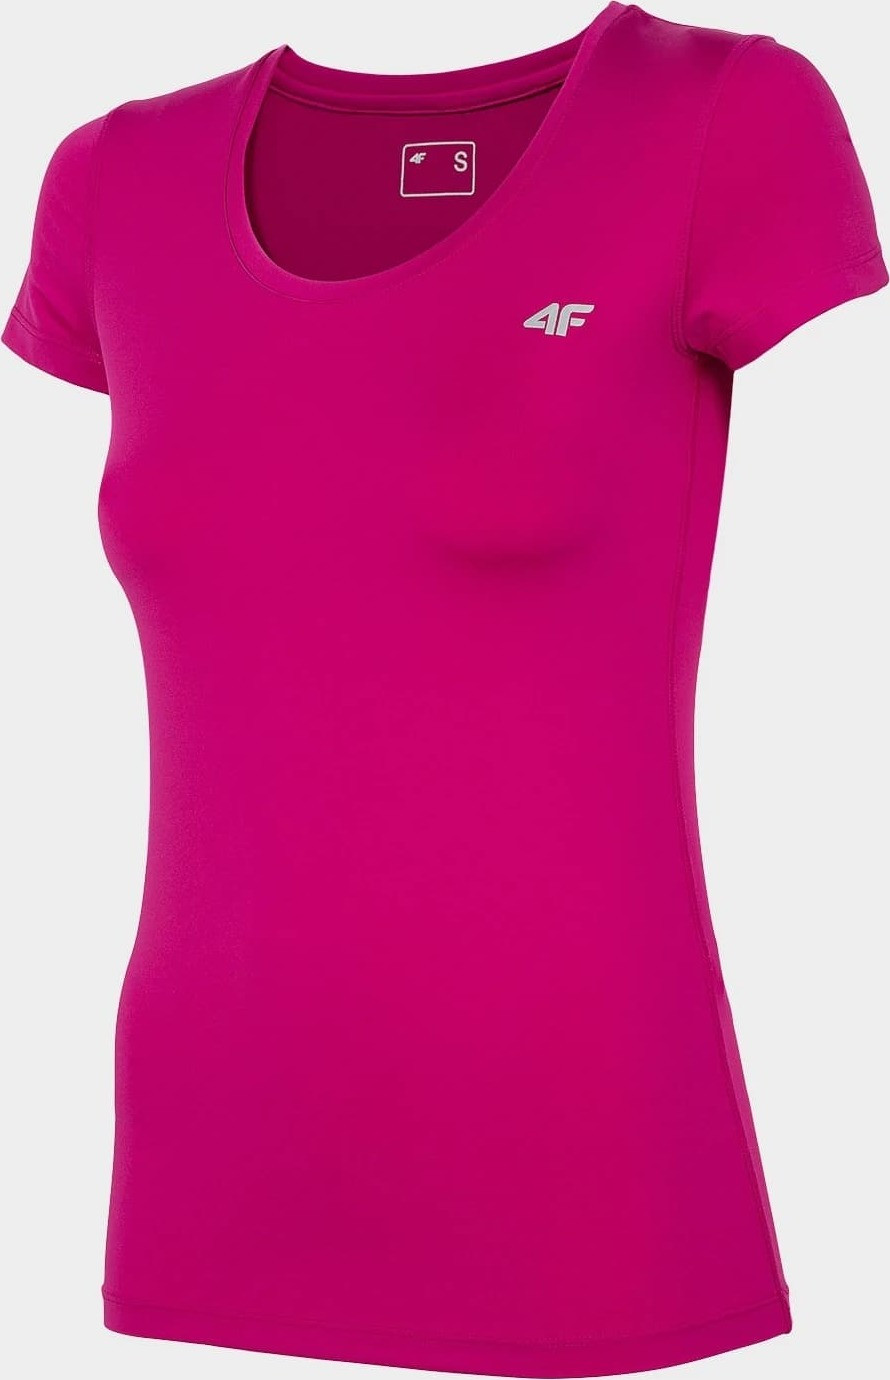 Dámské tričko 4F TSDF002 Růžové pink solid XXL